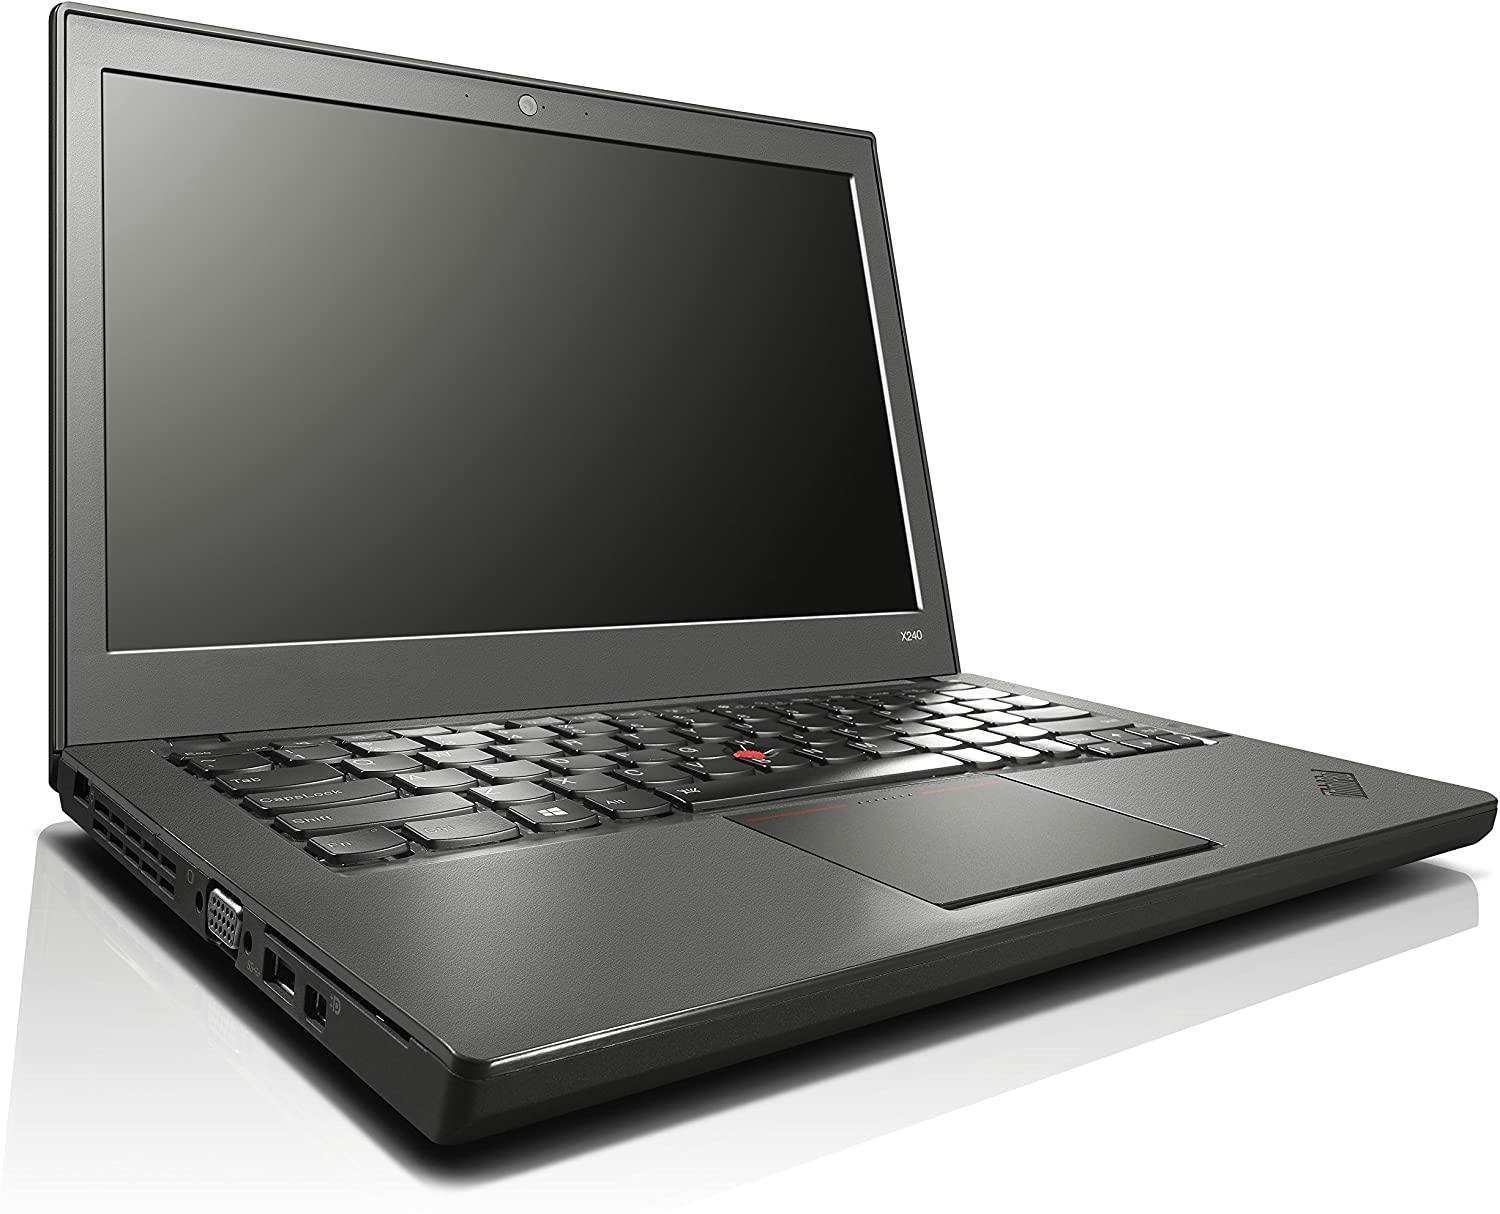 Lenovo Thinkpad X240 i5 4300u 1.9GHz 8GB Ram 128GB SSD Windows 10 Pro. Refurbrished - Atlas Computers & Electronics 